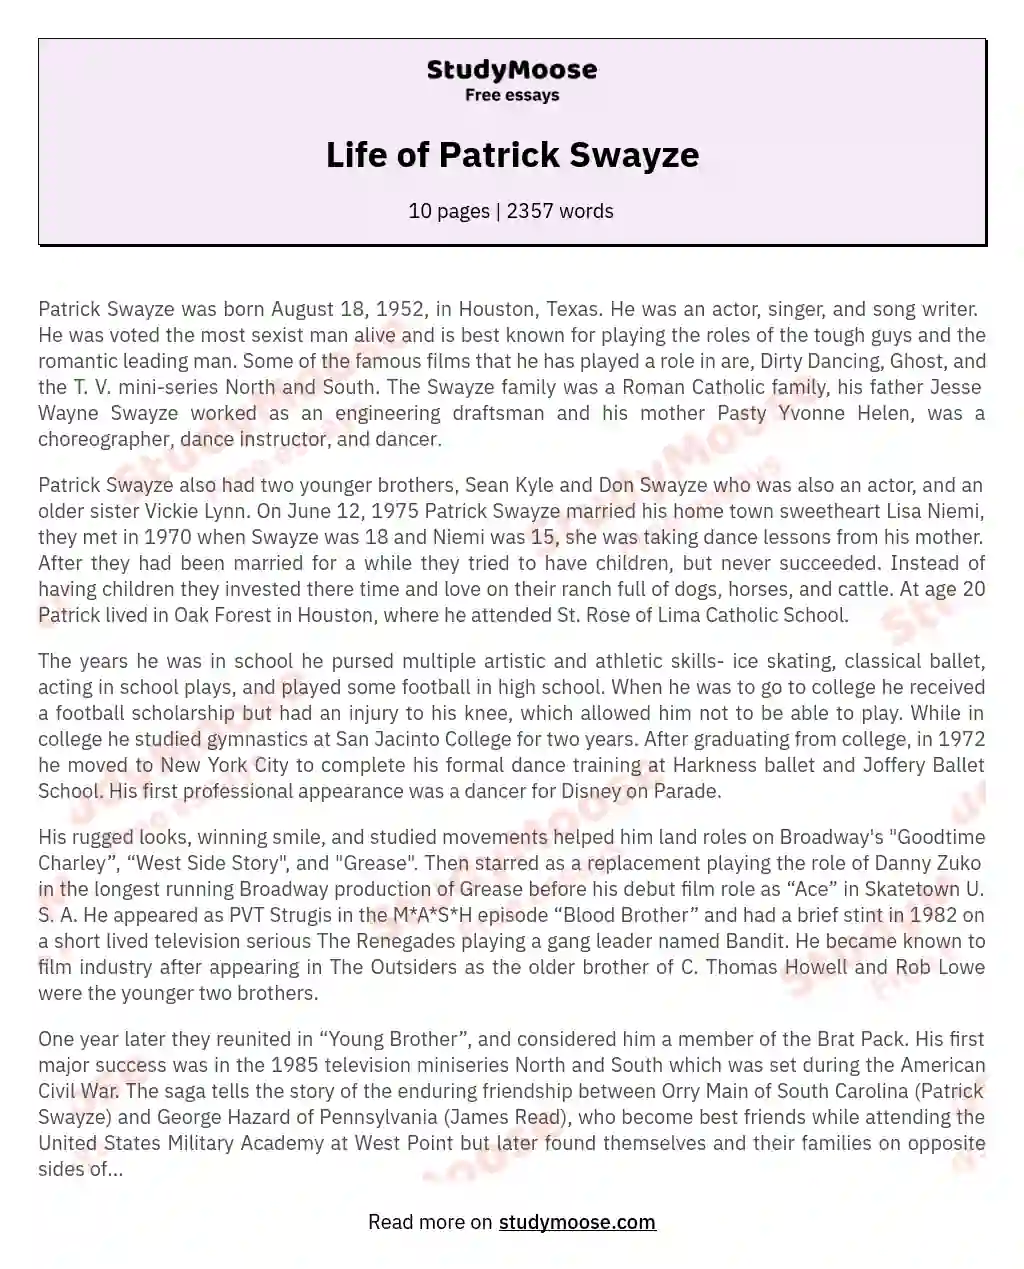 Life of Patrick Swayze